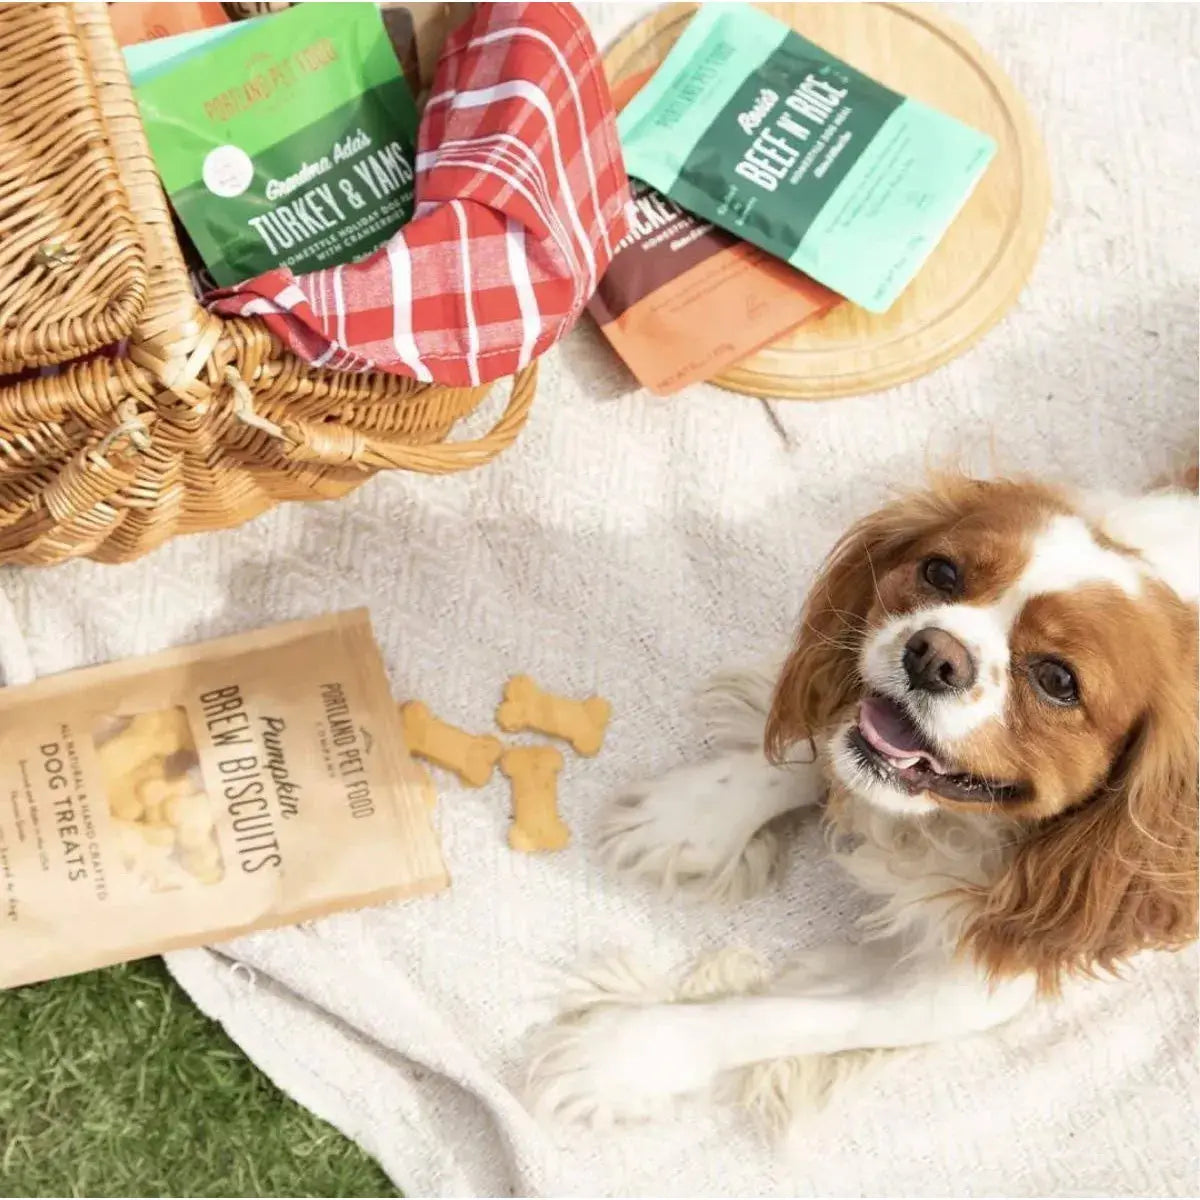 Portland Pet Food Company Bacon Brew Biscuits Dog Treats 5oz Portland Pet Food